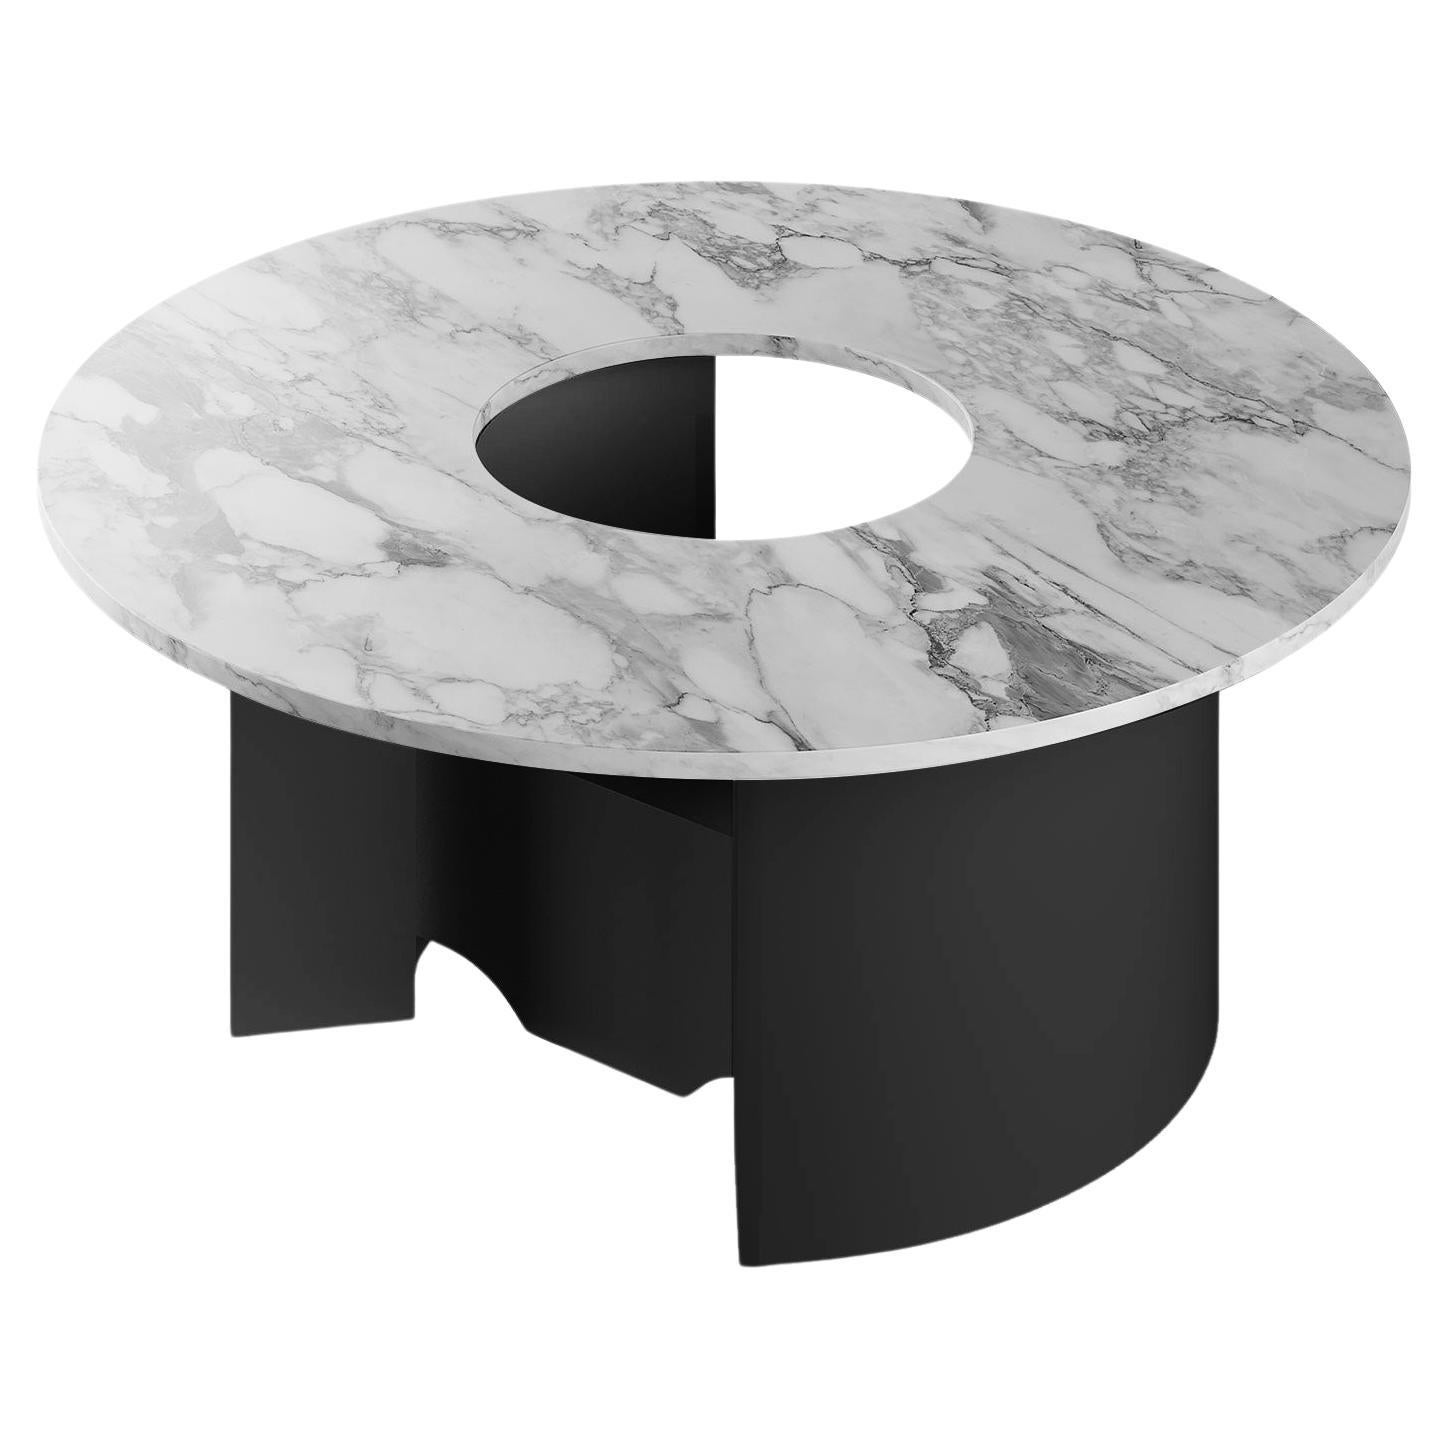 The Moderns Modernity Table centrale ronde Plateau en marbre blanc Calacatta Laque noire mate en vente